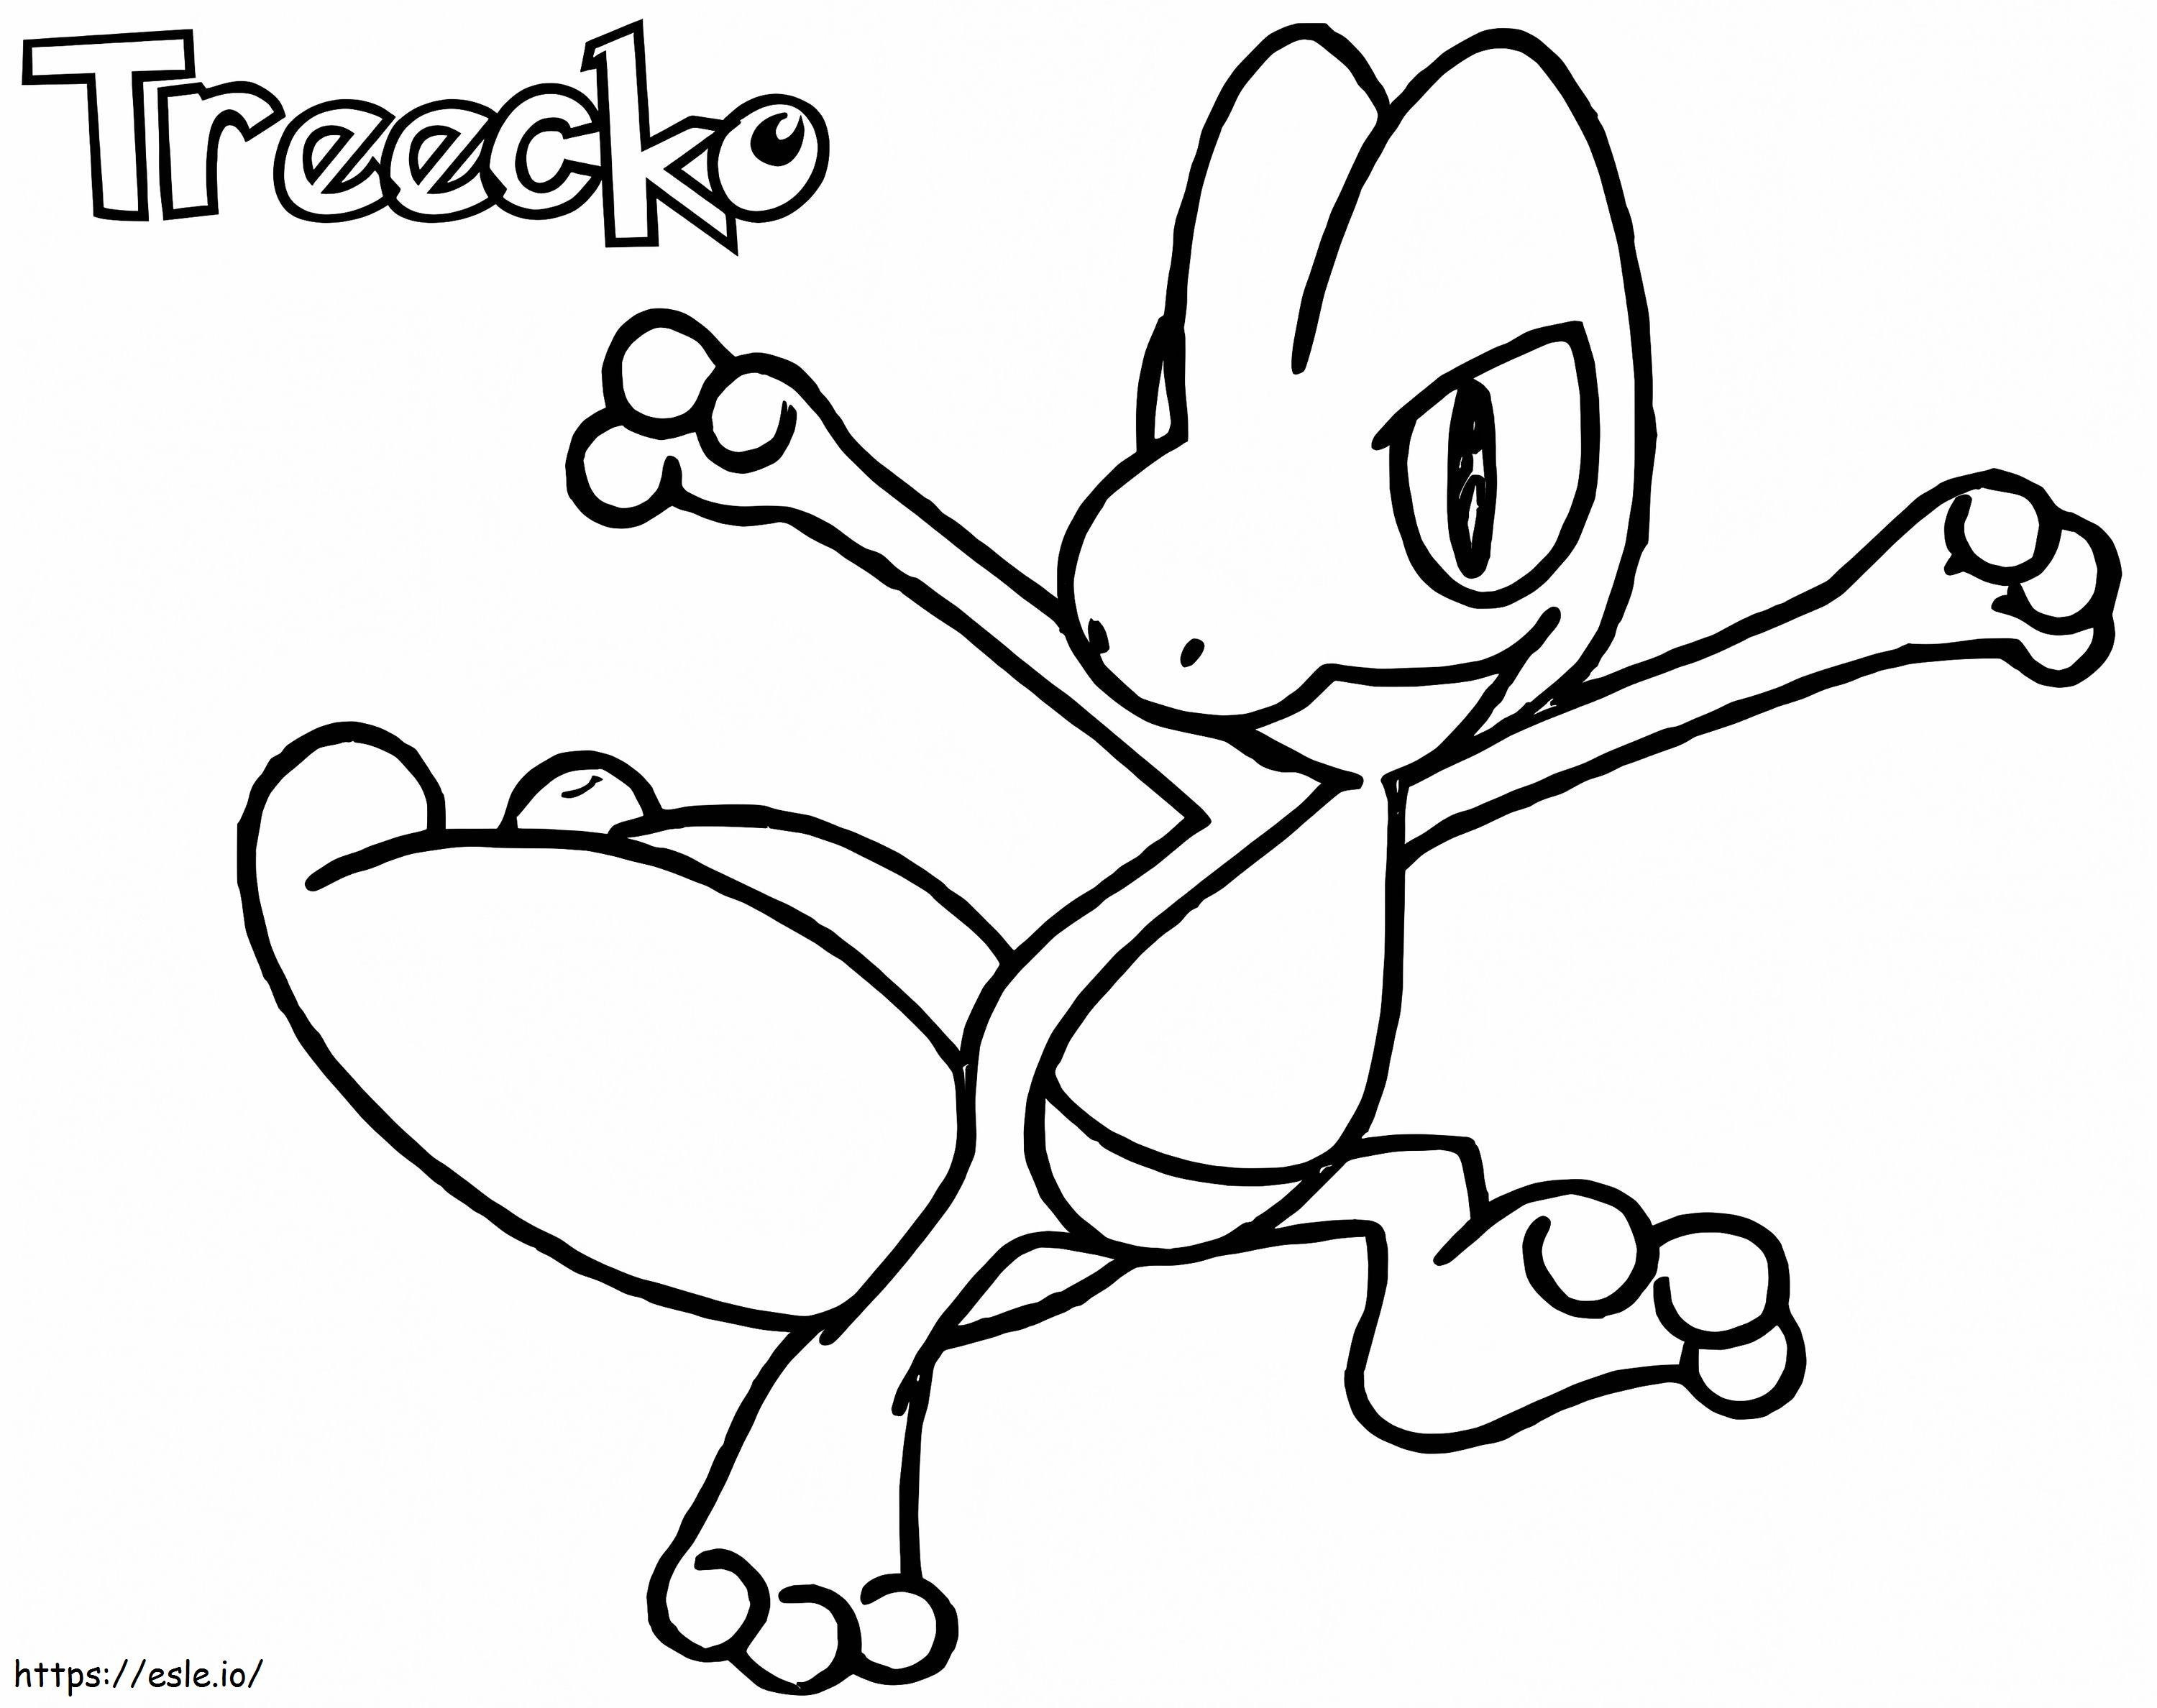 Druckbares Treecko-Pokémon ausmalbilder